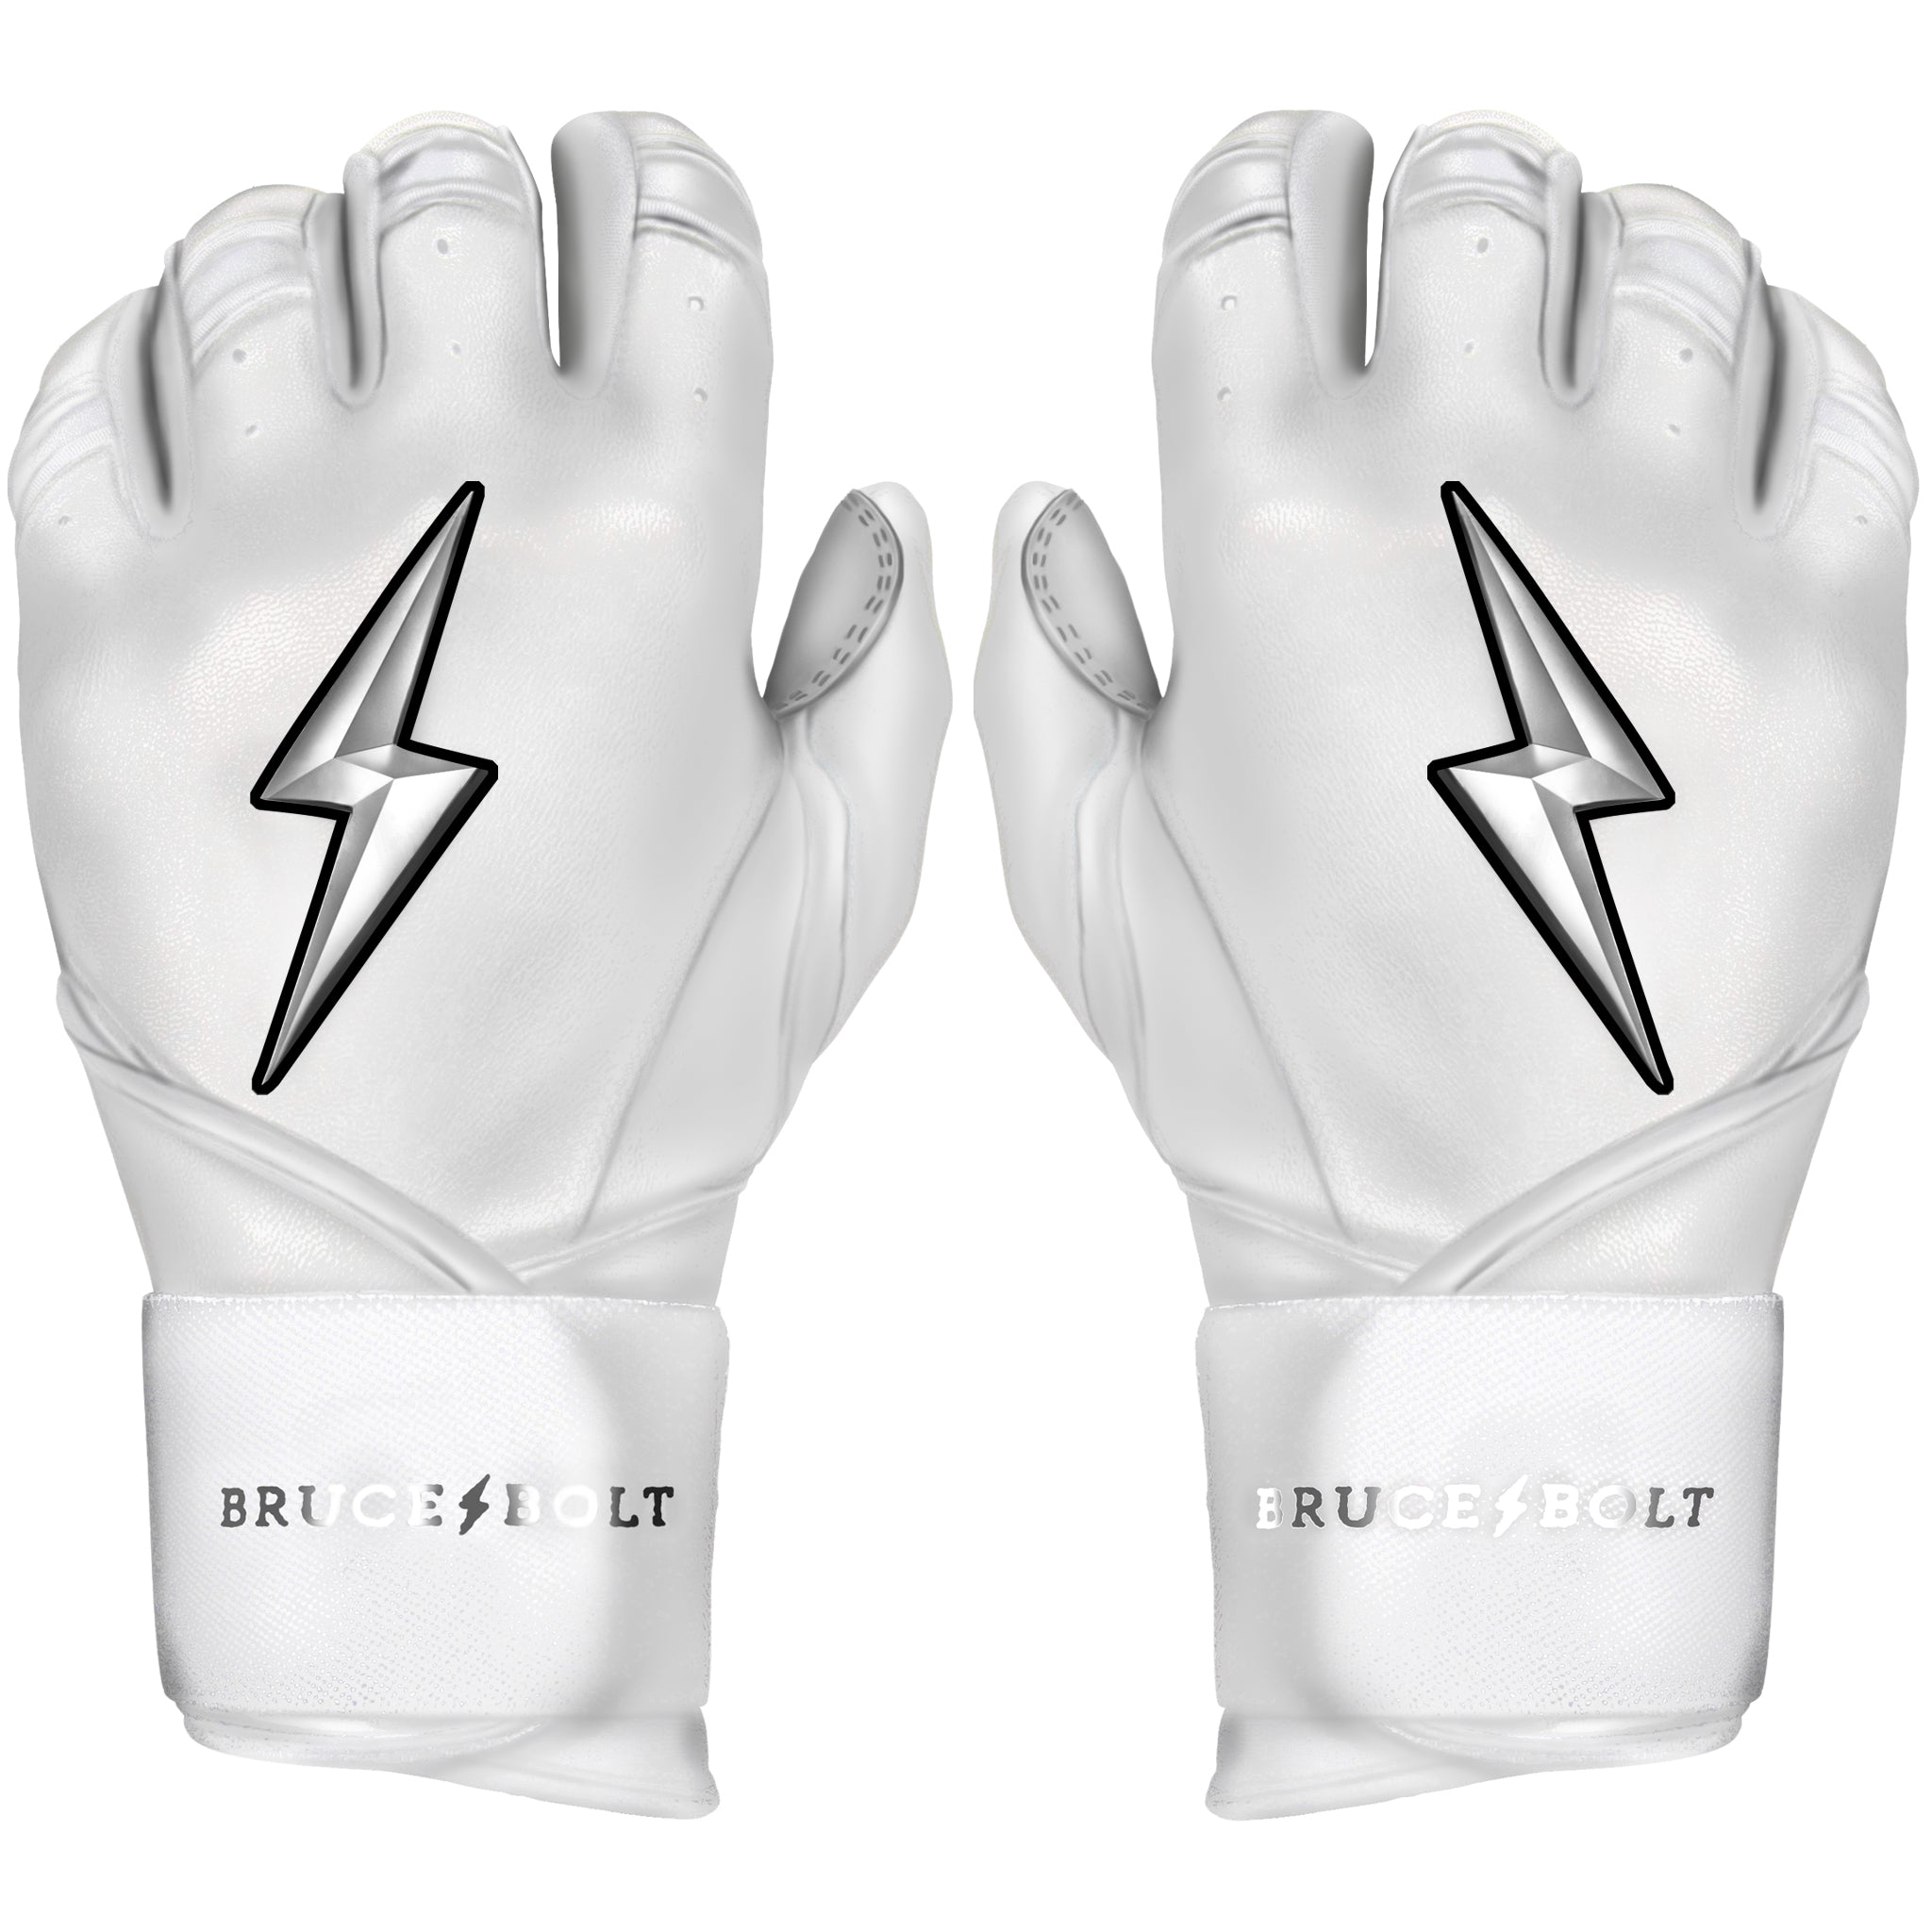 Bruce Bolt Large Batting Gloves(2 pairs)